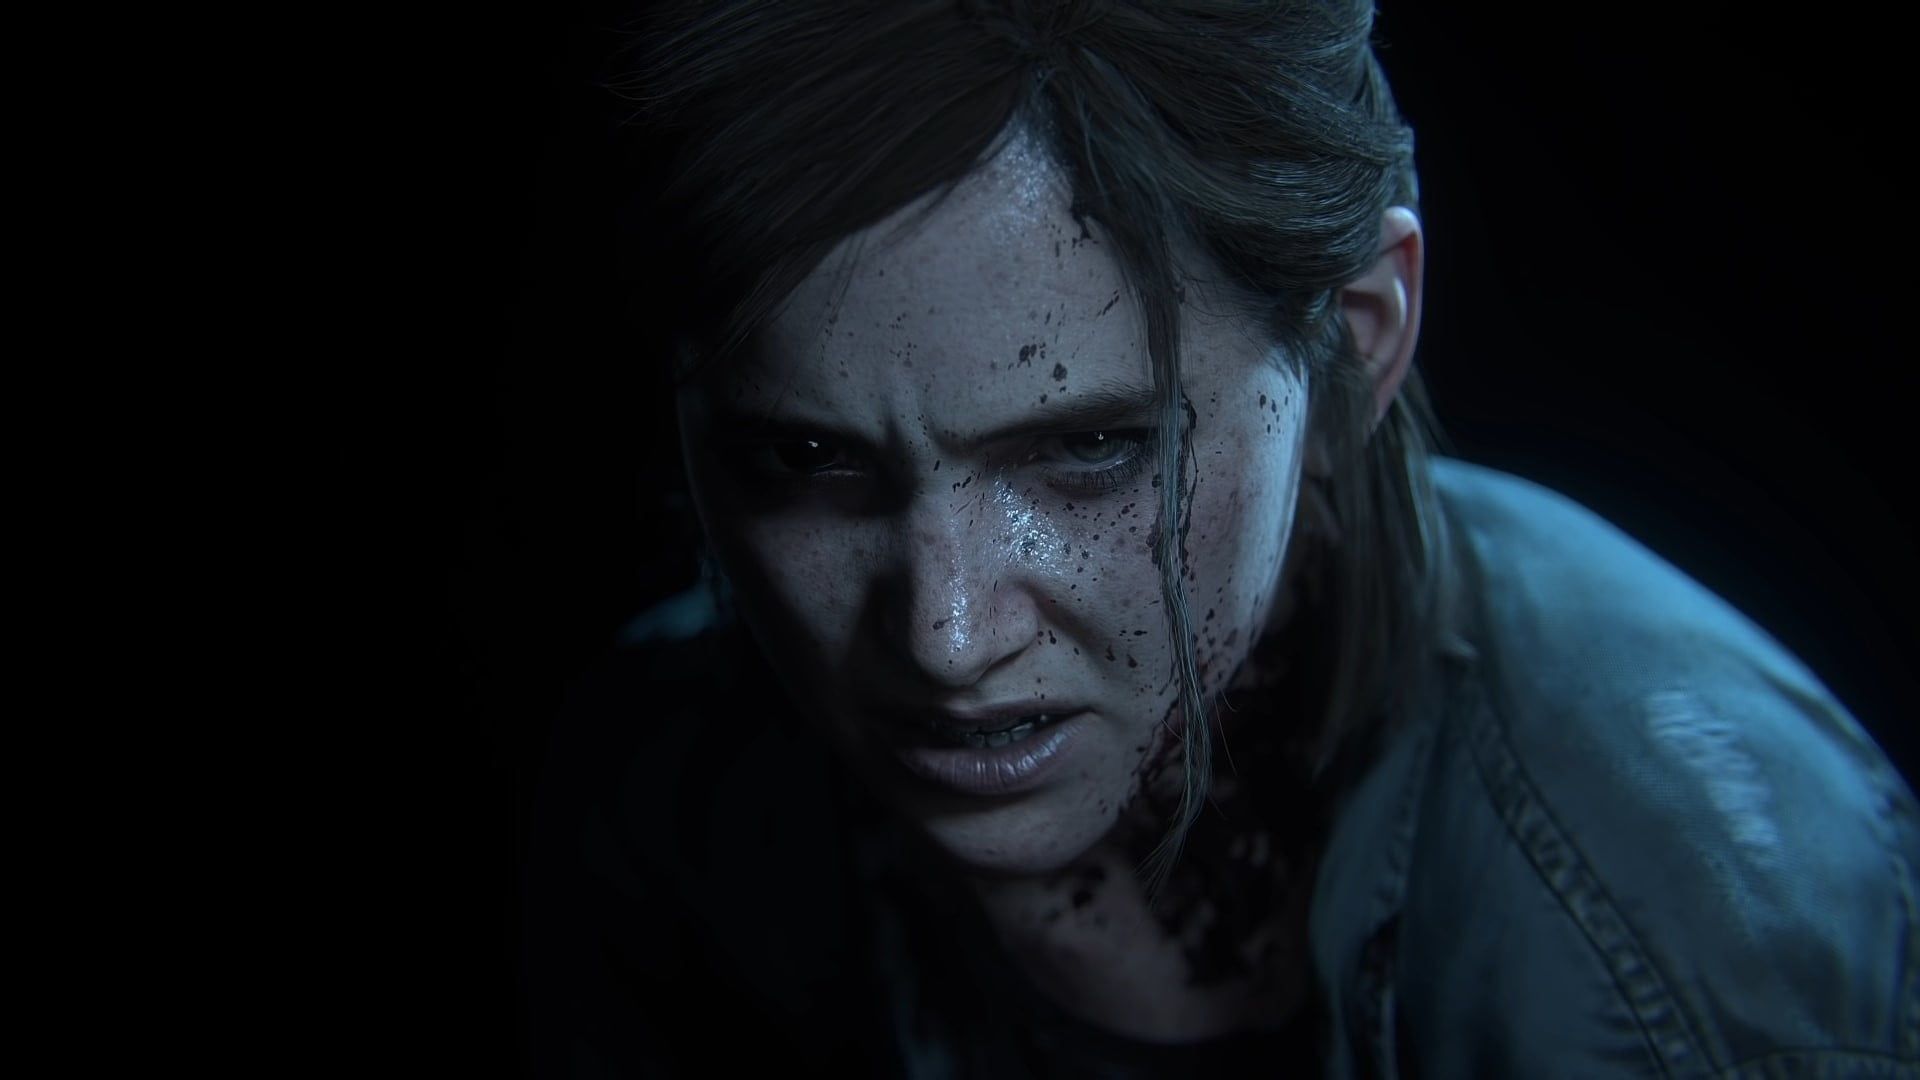 The Last of Us Part II Launch Shows a Vengeful Ellie